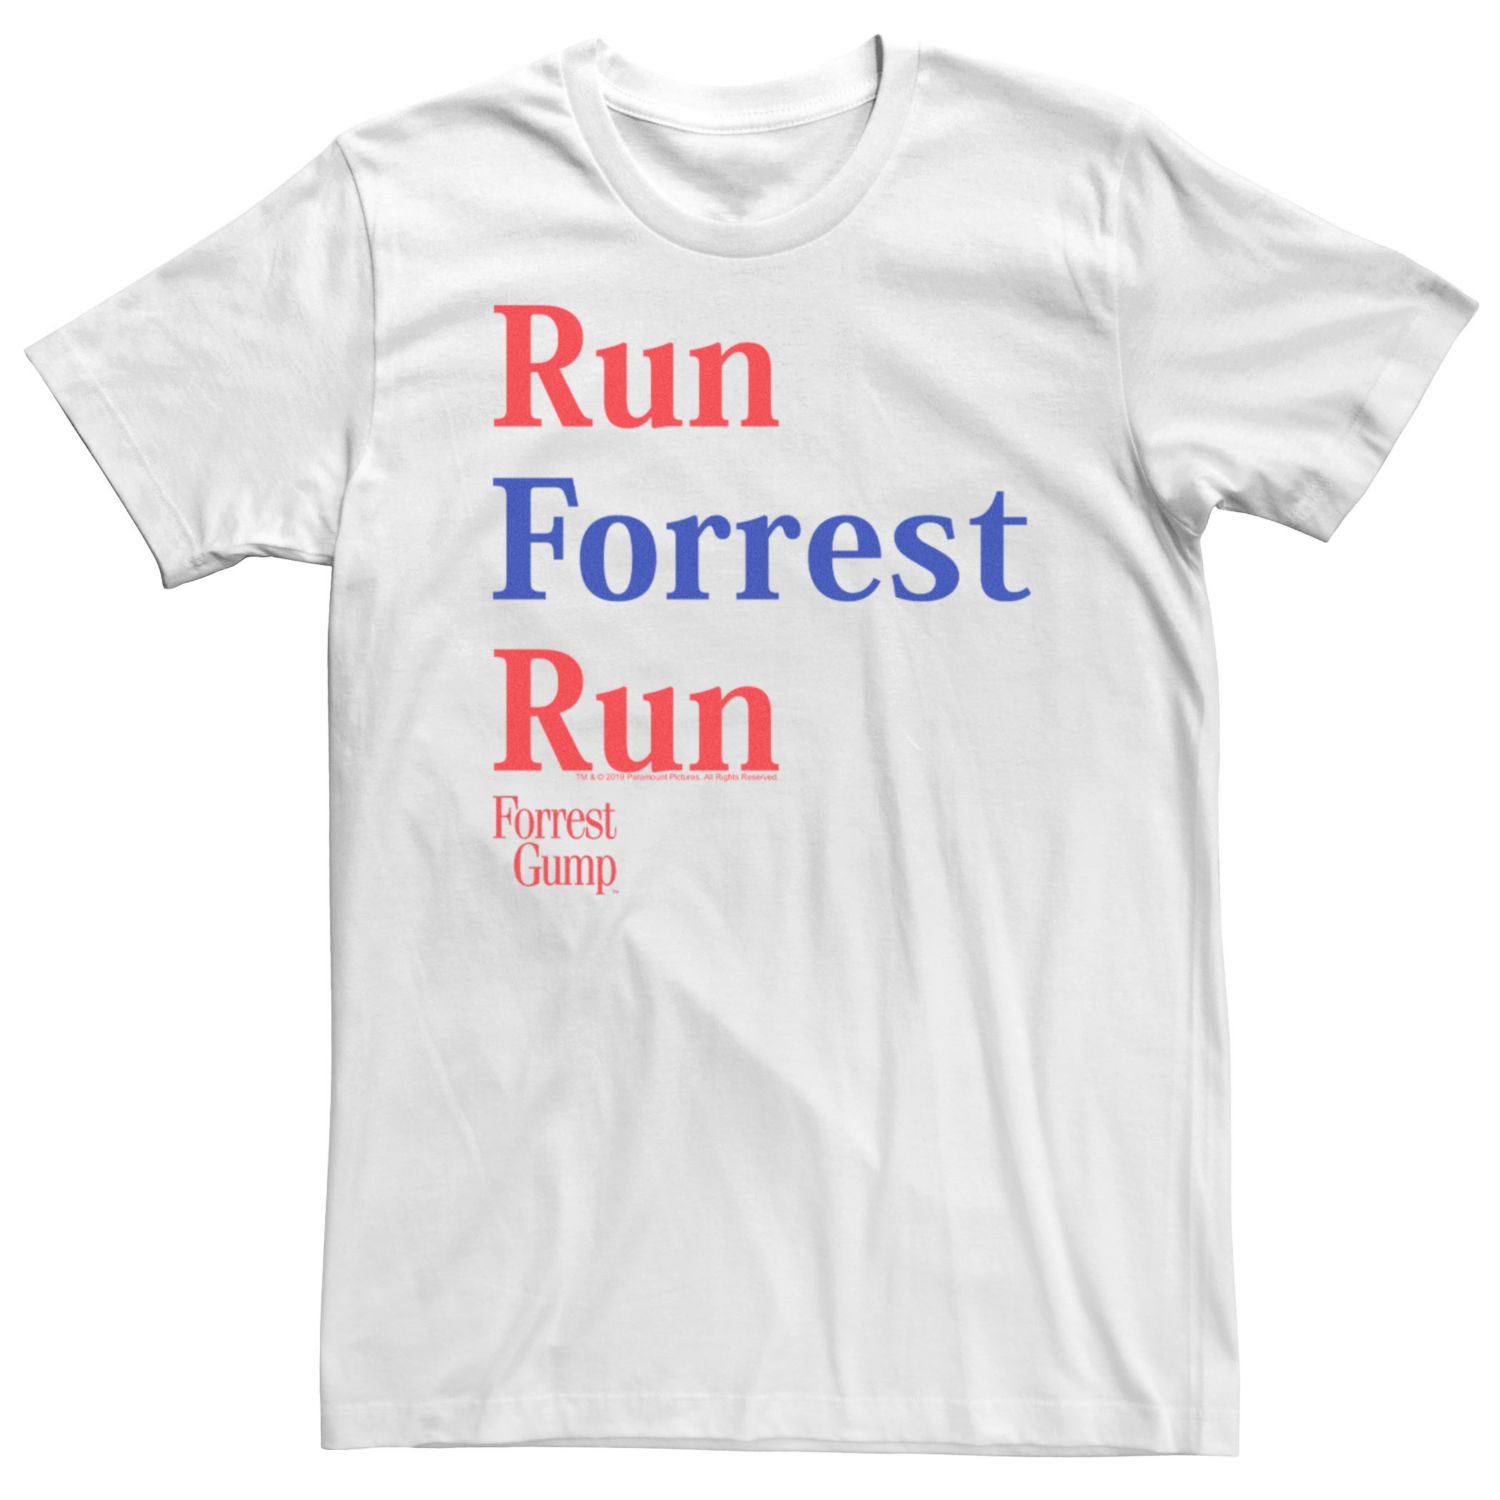 Image for Licensed Character Men's Forrest Gump Run Forrest Run Tee at Kohl's.